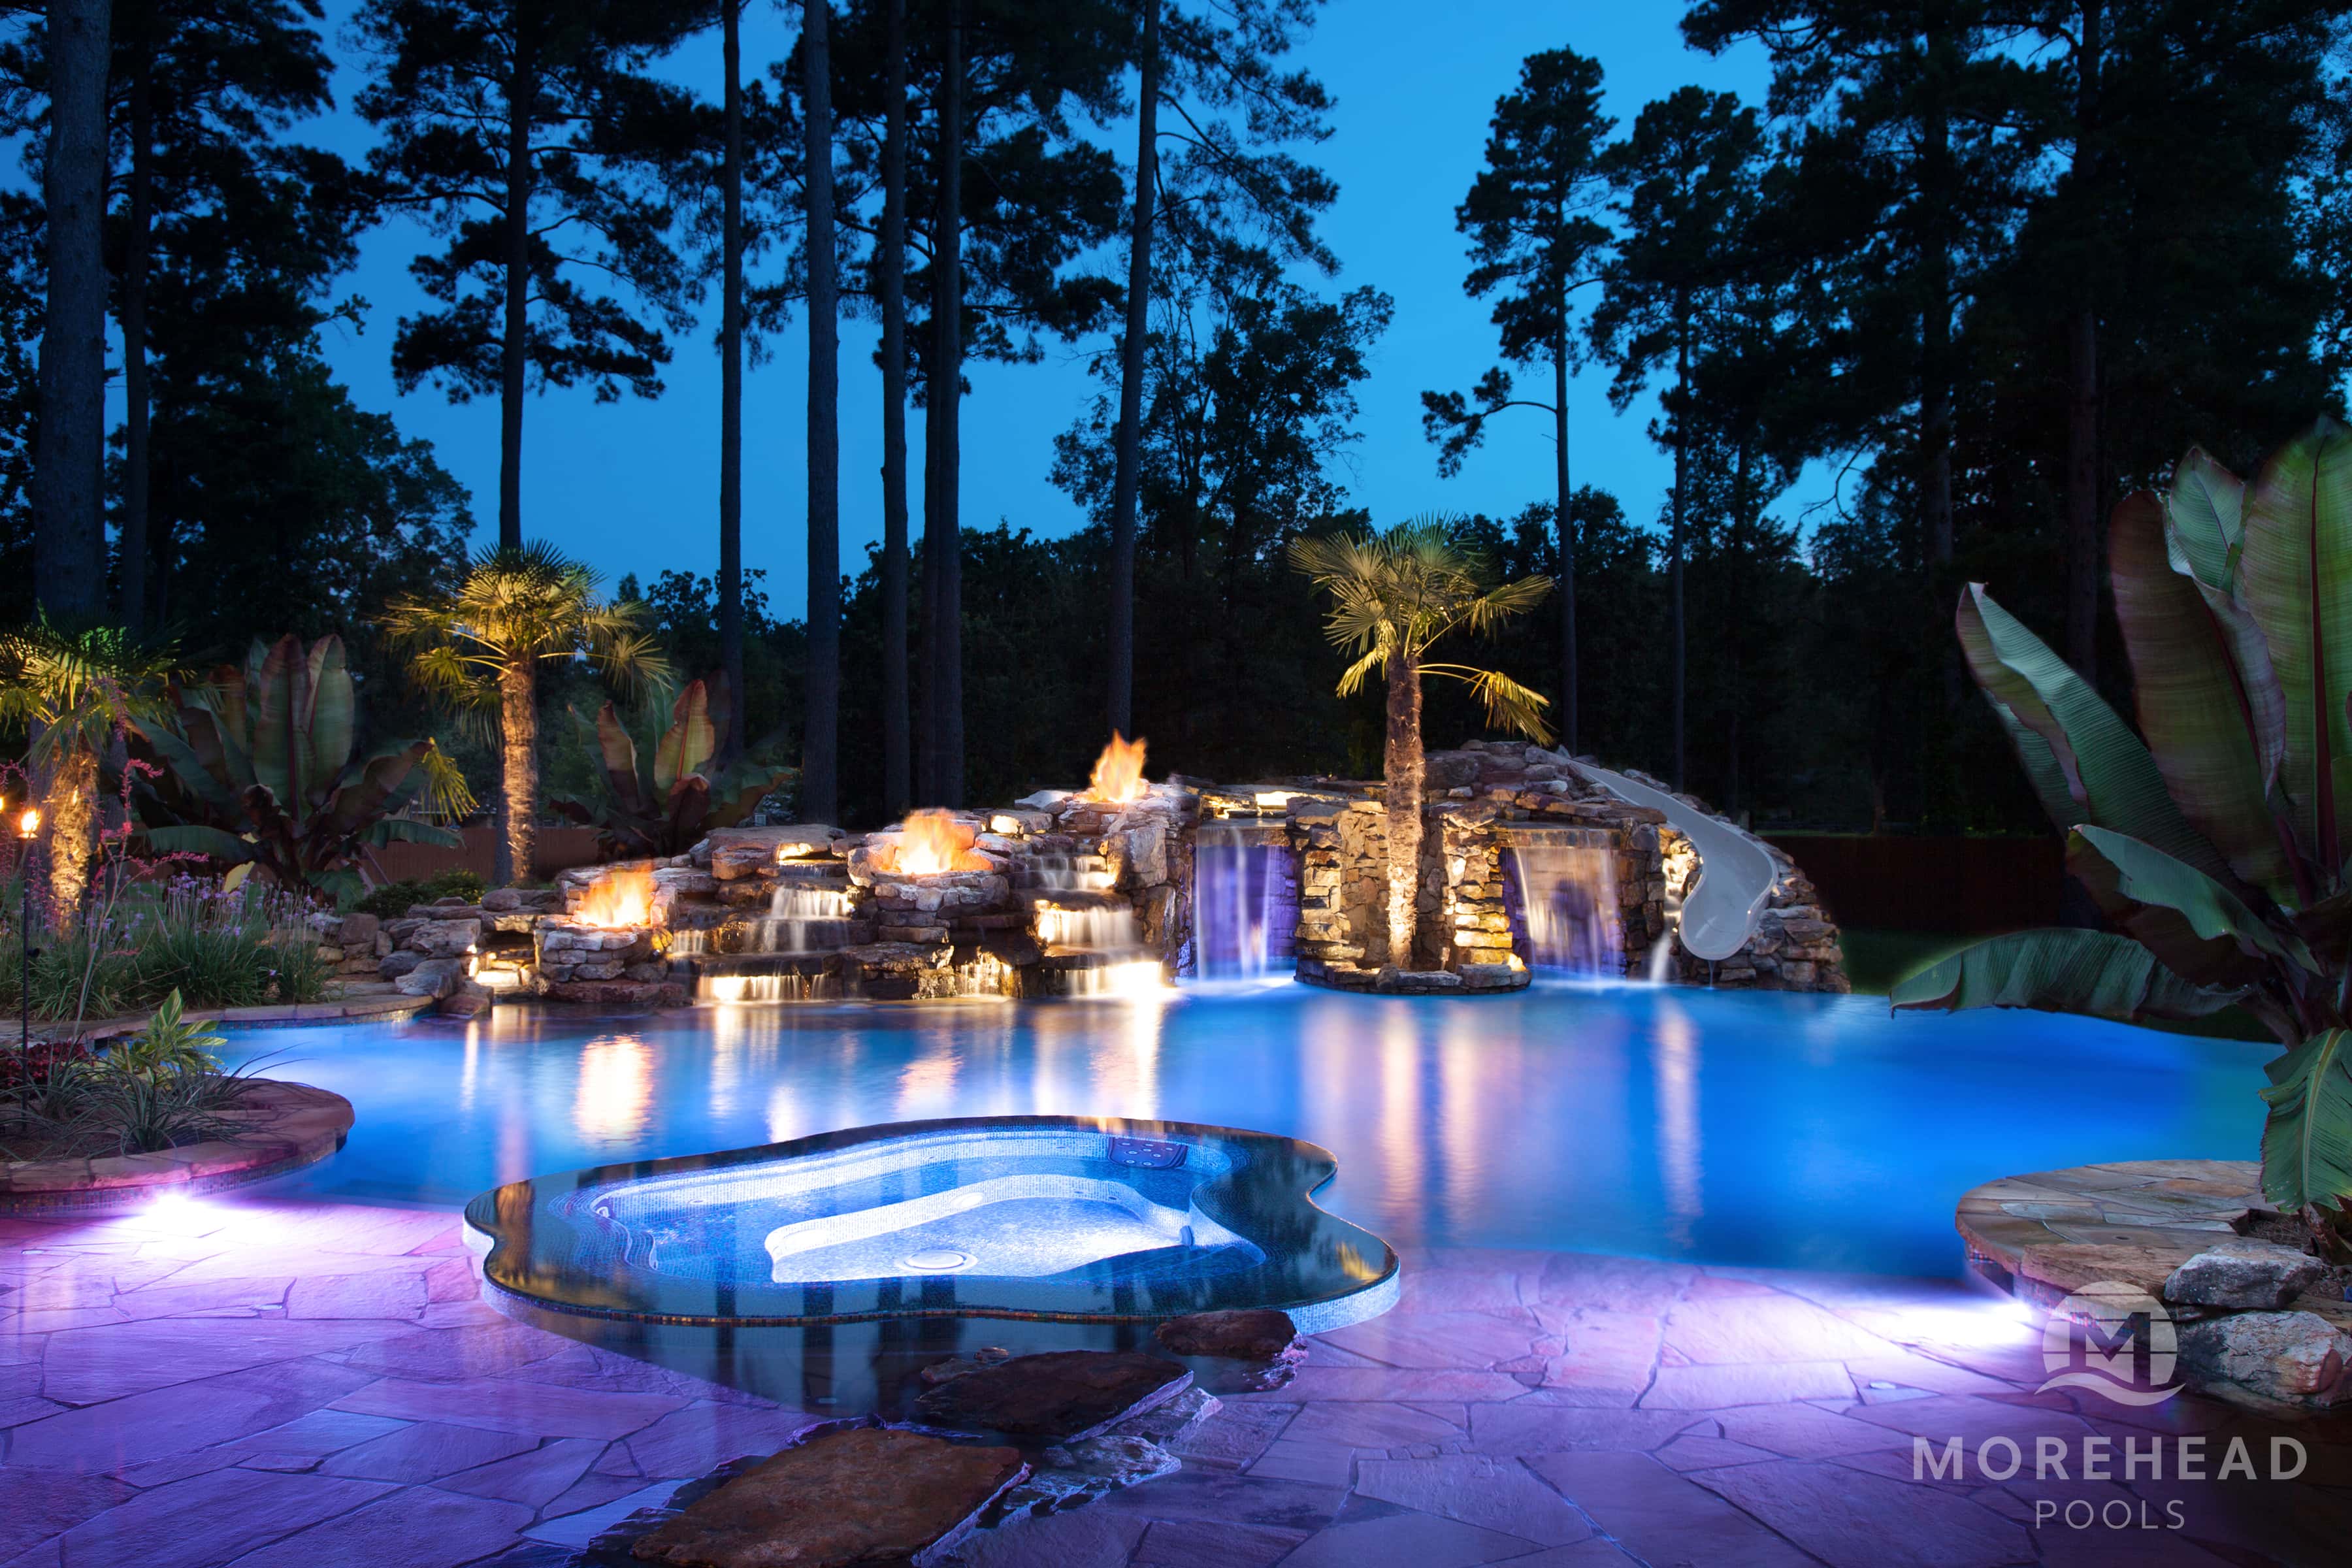 Pool Slide  Dream backyard pool, Outdoor pool area, Backyard pool